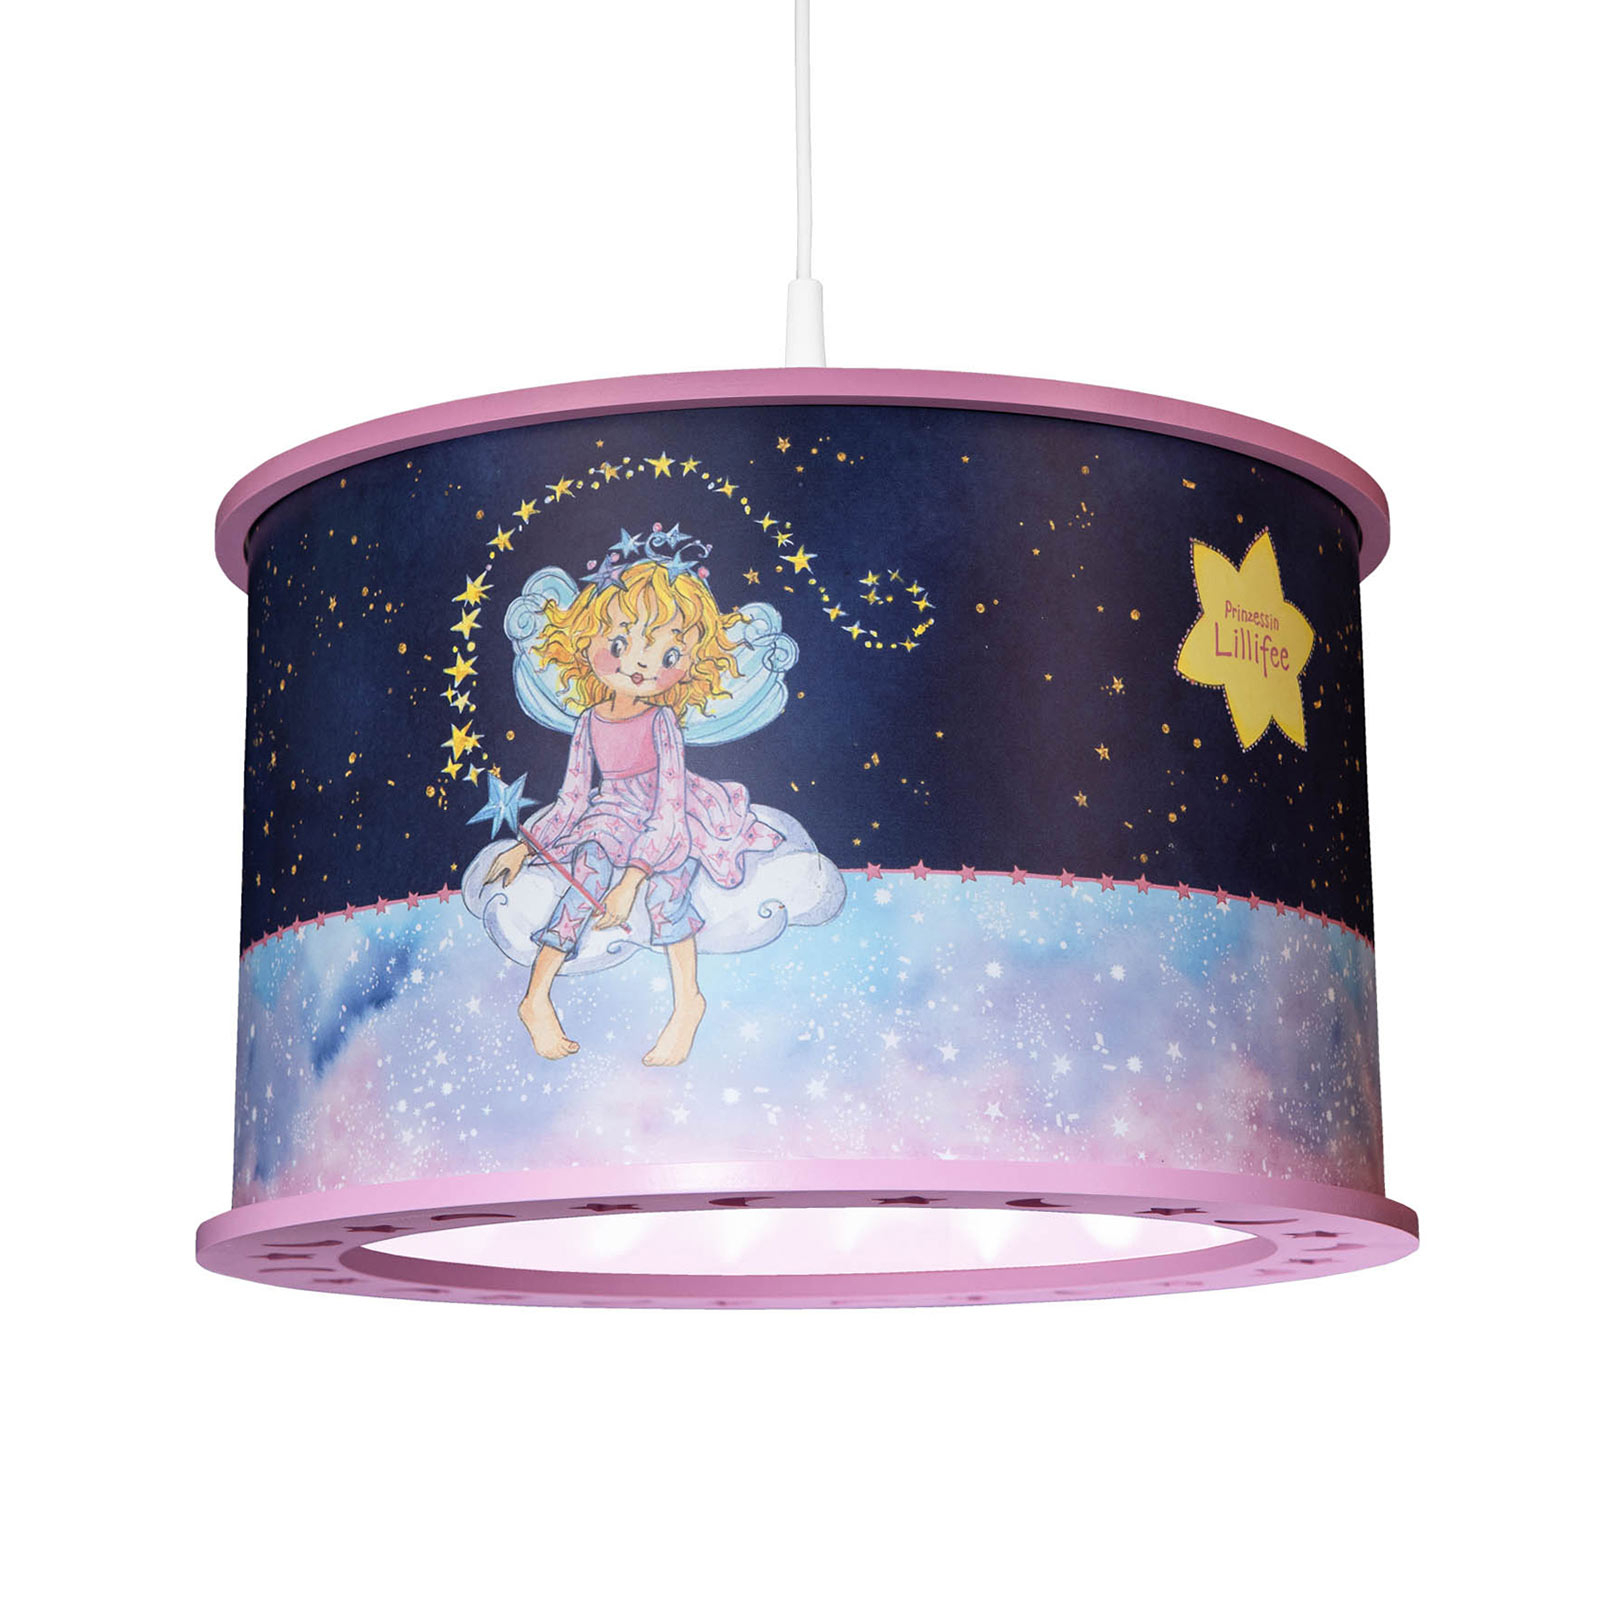 Princess Lillifee pendant light, magical stars